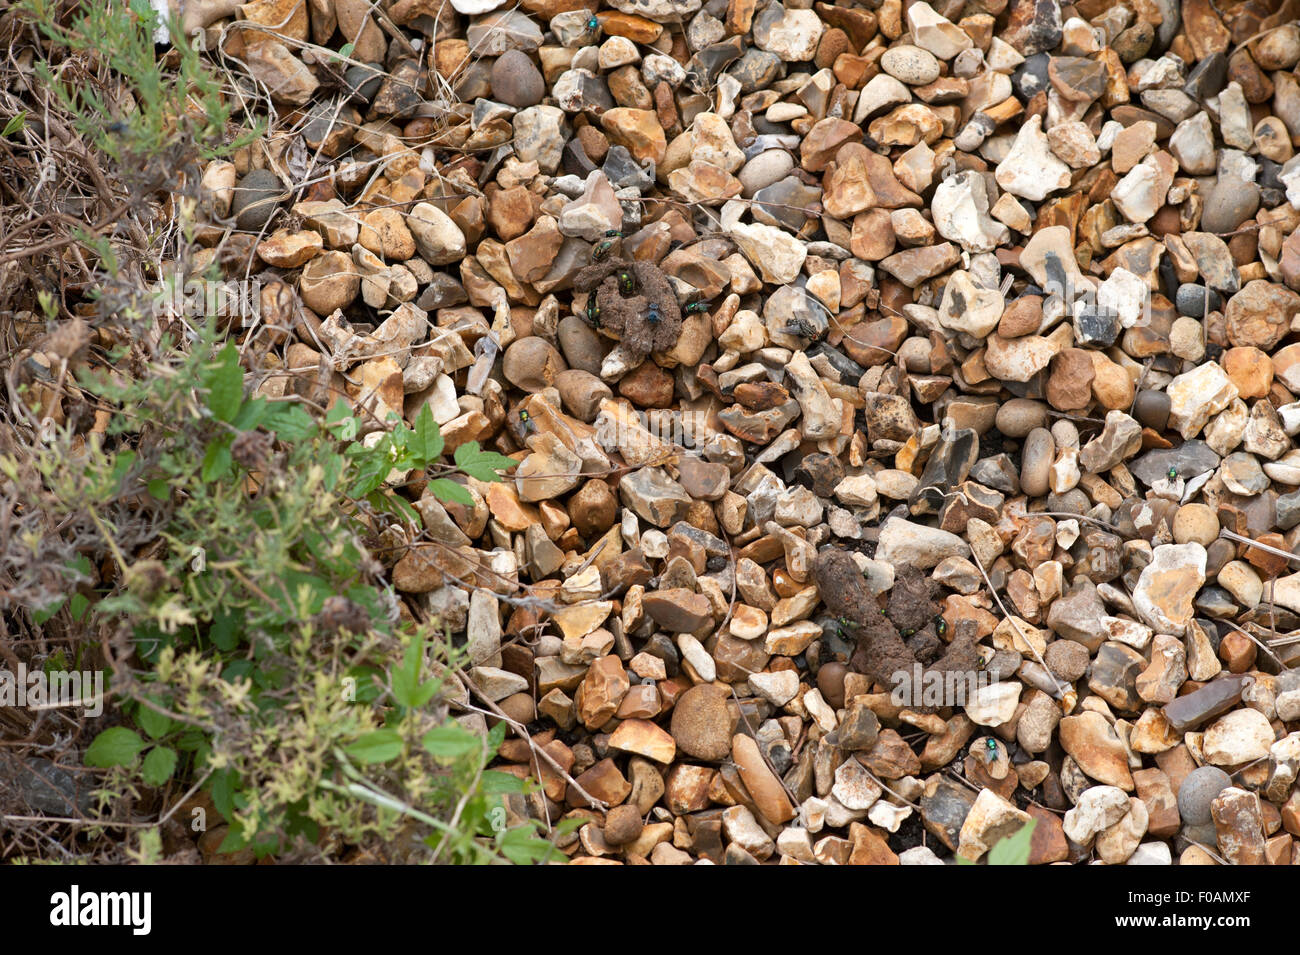 blow flies around cat excrement on stones in a garden Stock Photo